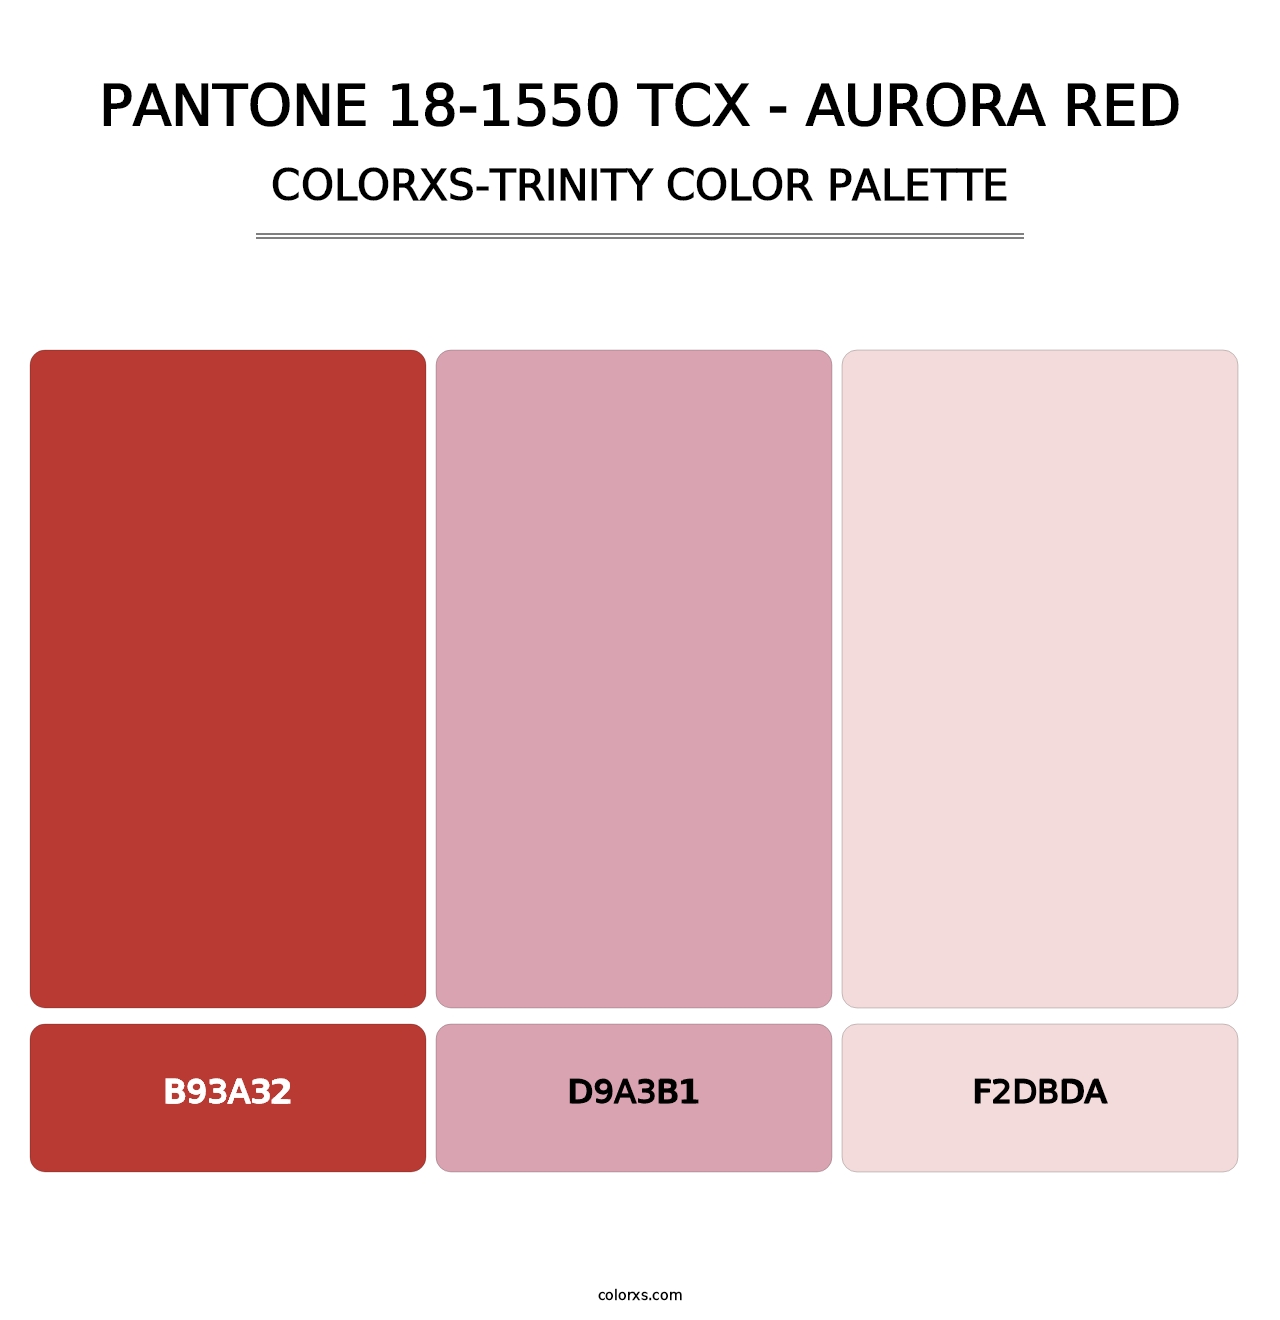 PANTONE 18-1550 TCX - Aurora Red - Colorxs Trinity Palette